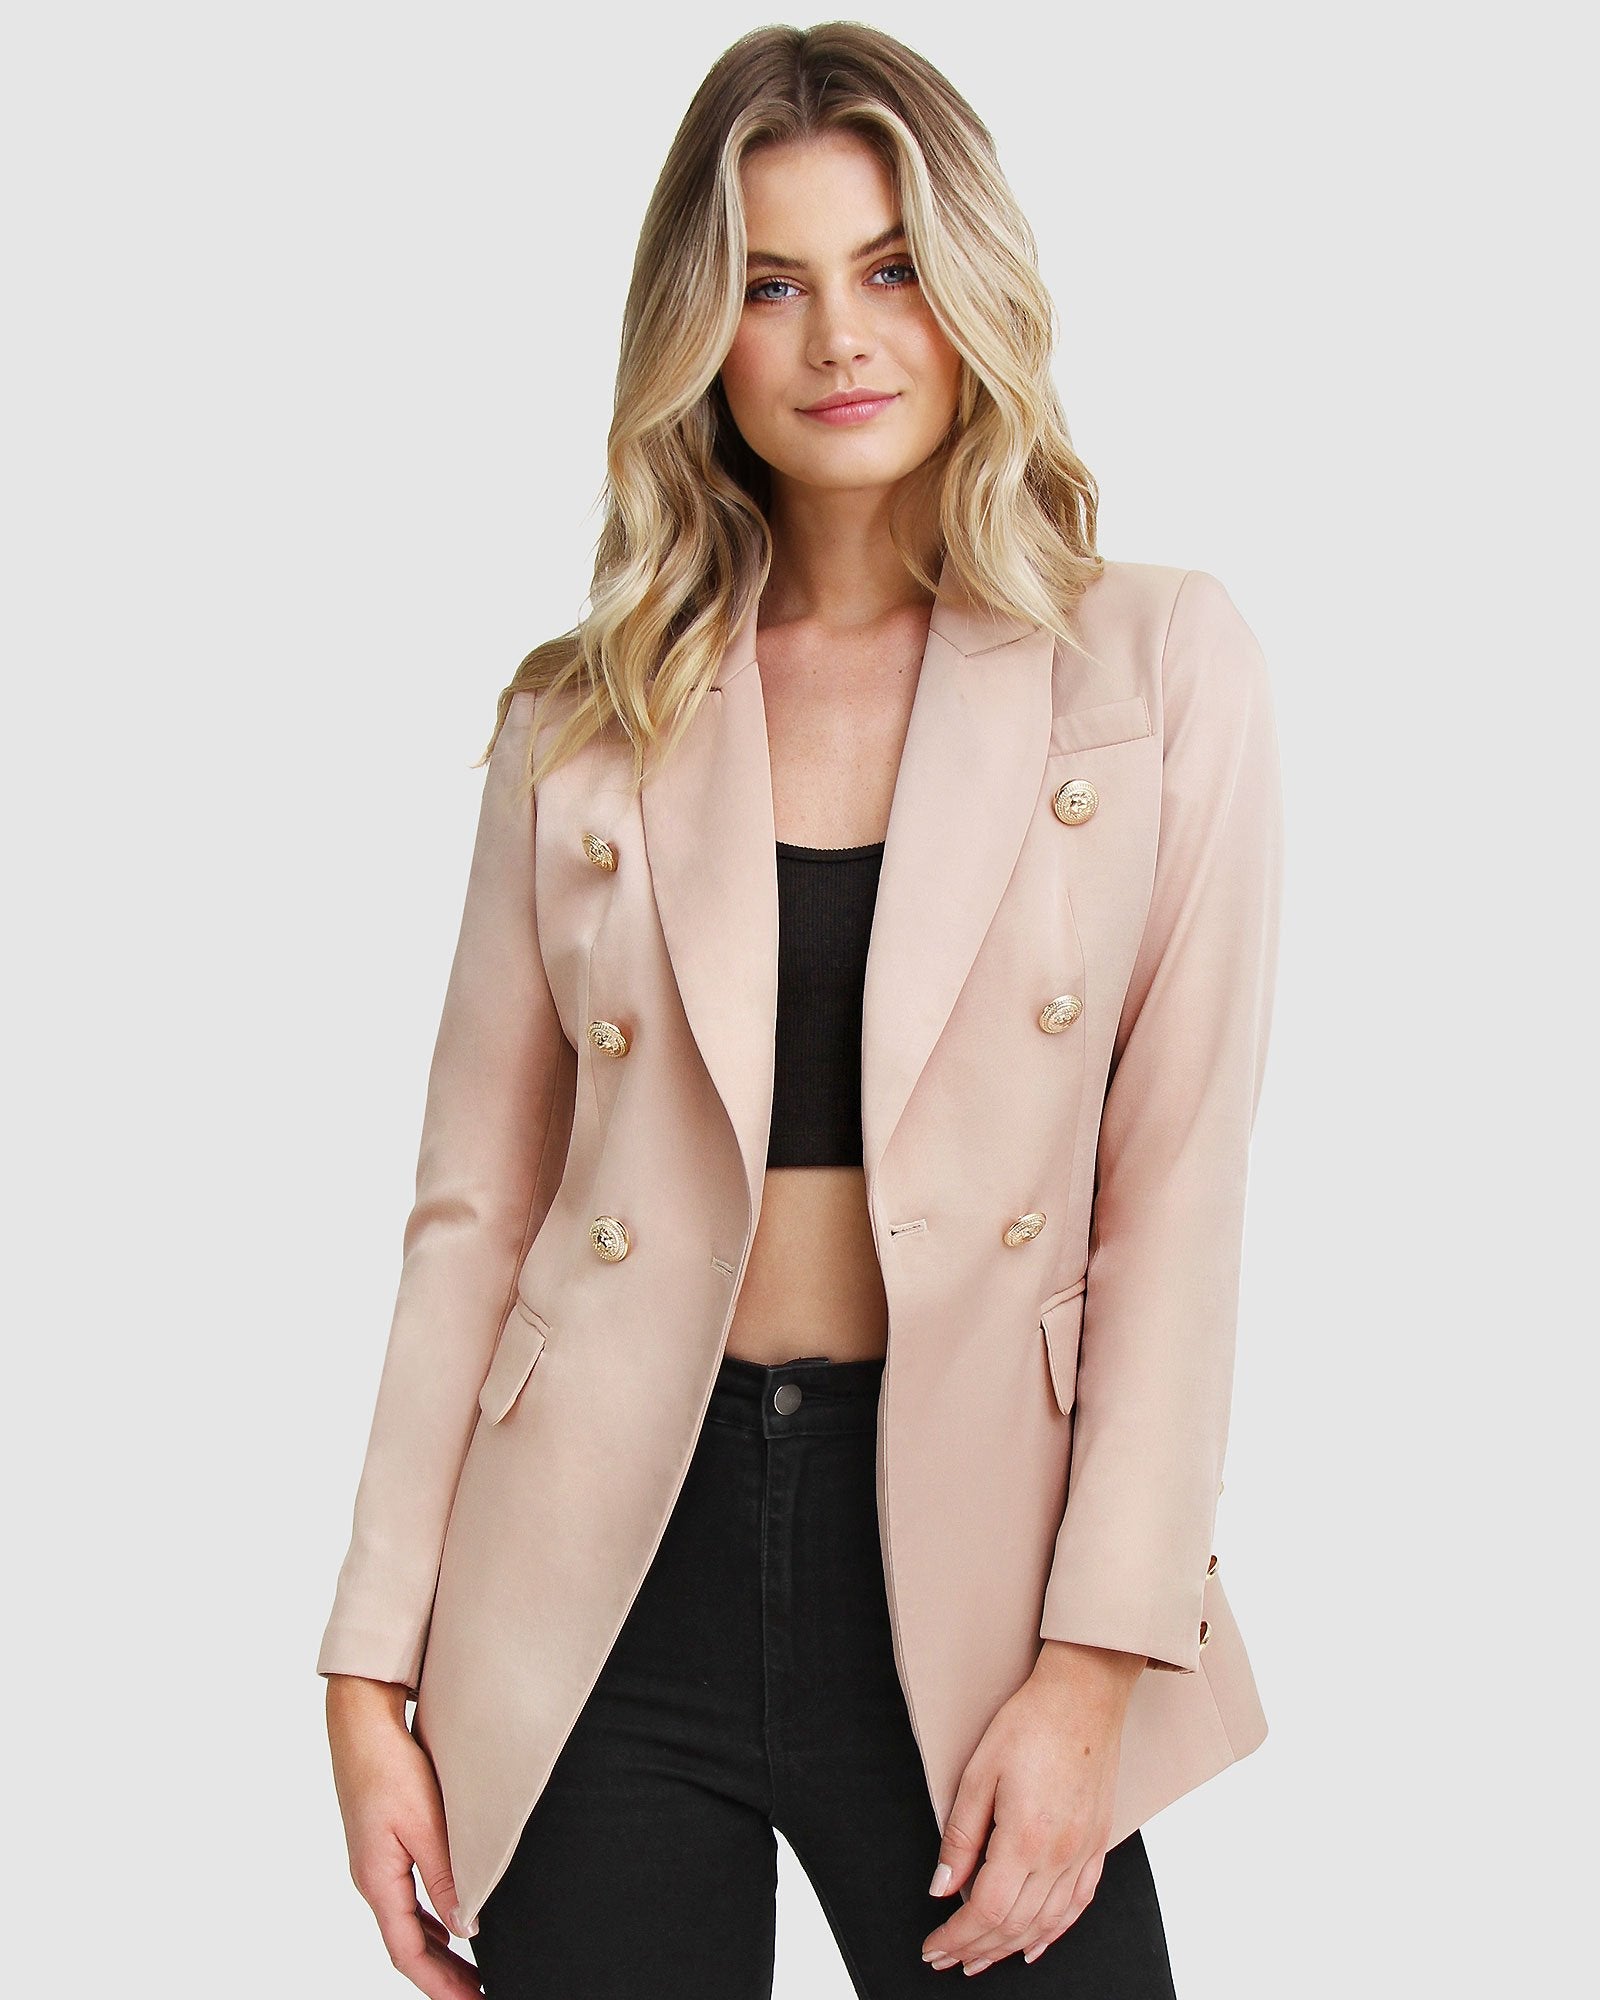 A Tweed Jacket For Fall - Blush & Blooms - Blush & Blooms